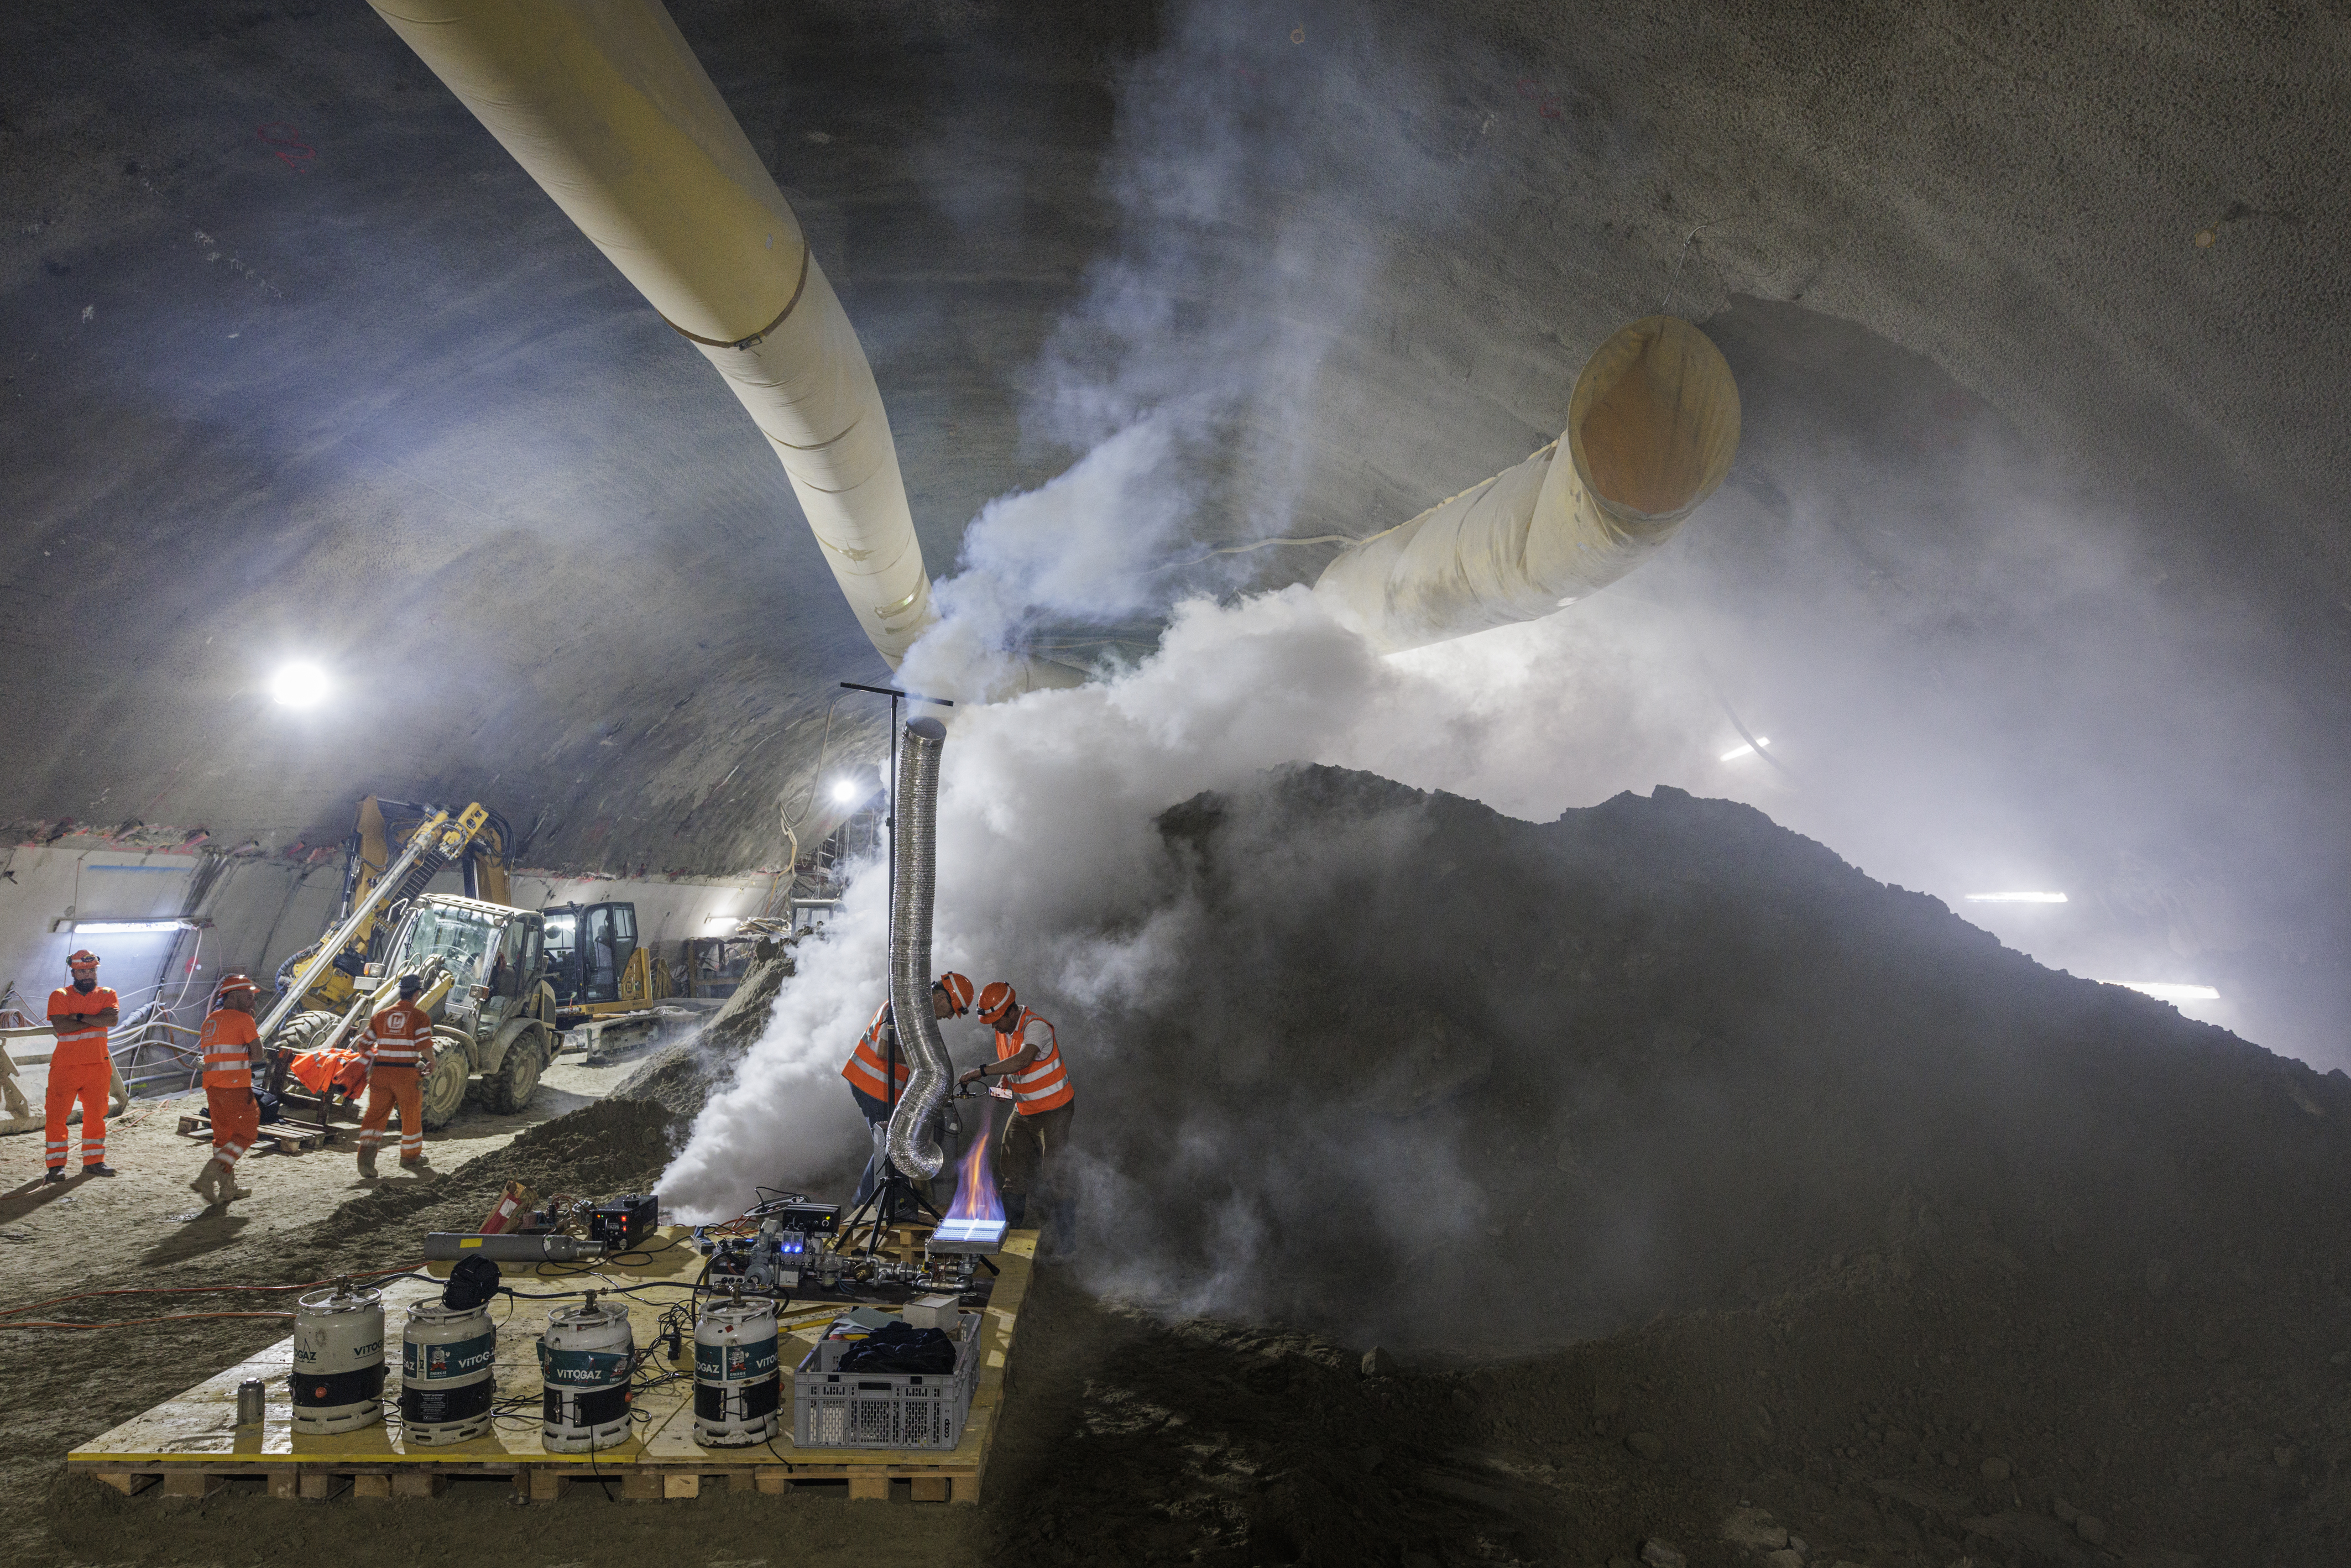  Smoke test at the Bern RBS underground railway station construction site 